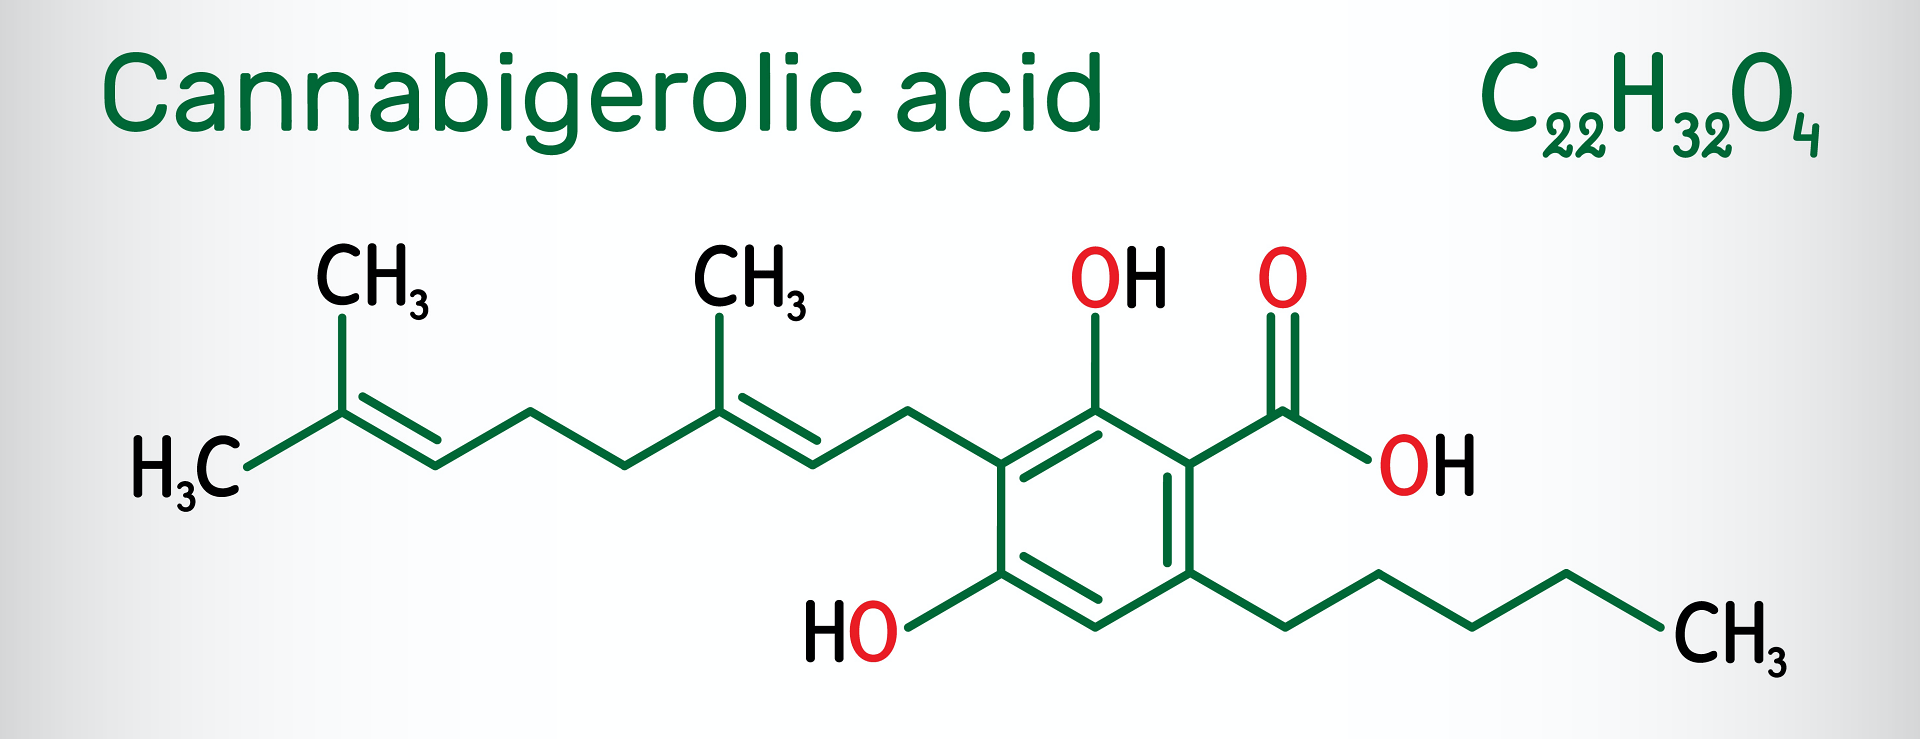 Cannabigerolic Acid - Best High CBG Hemp Strains